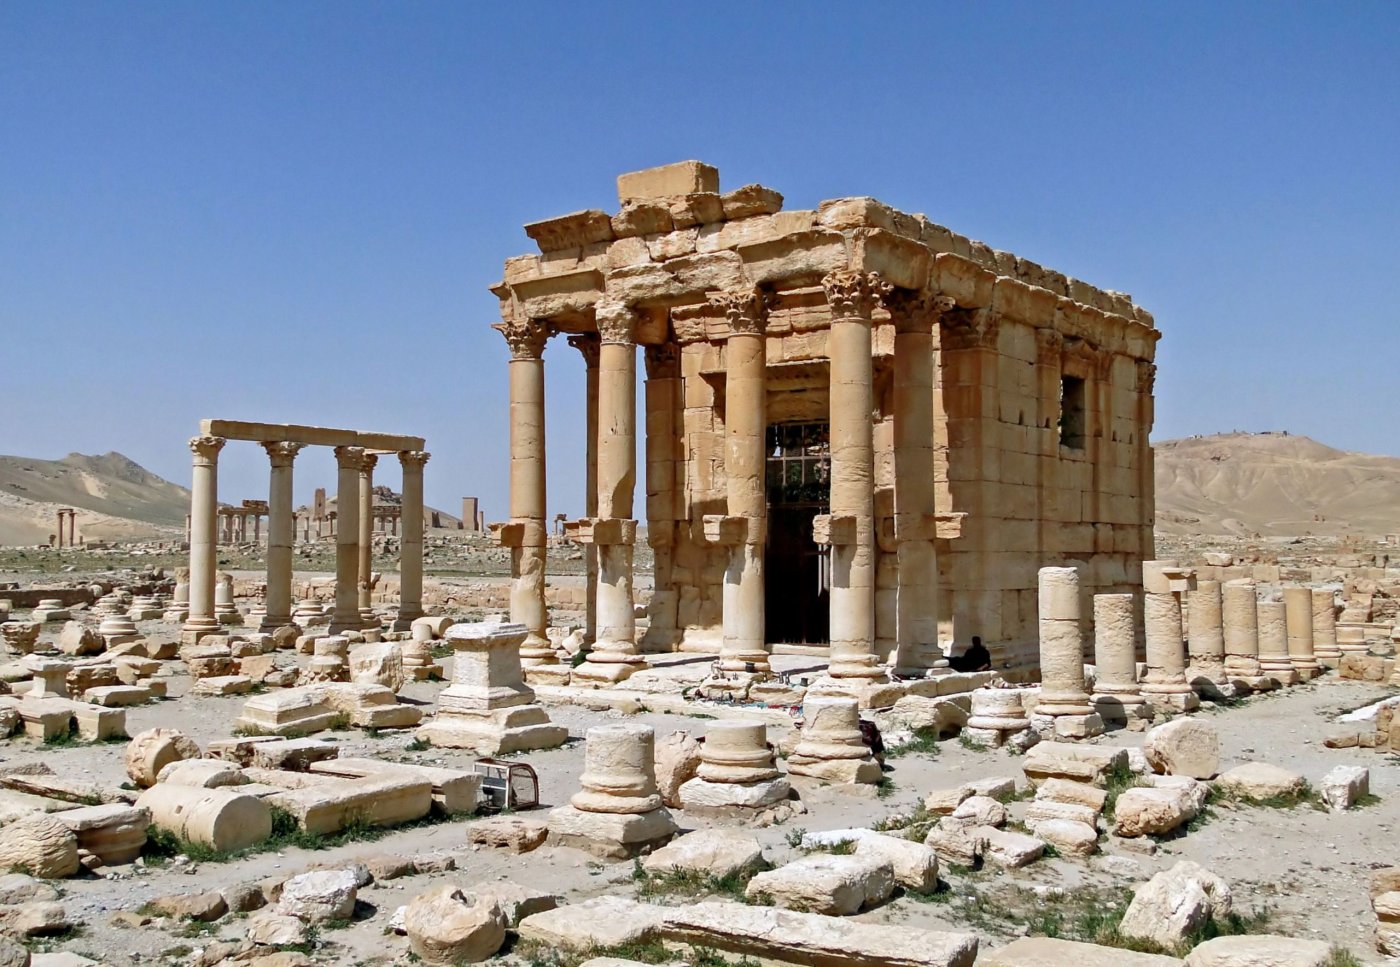  Temple of Baal-Shamin. Syria, Homs Governorate, Palmyra, Decumanus